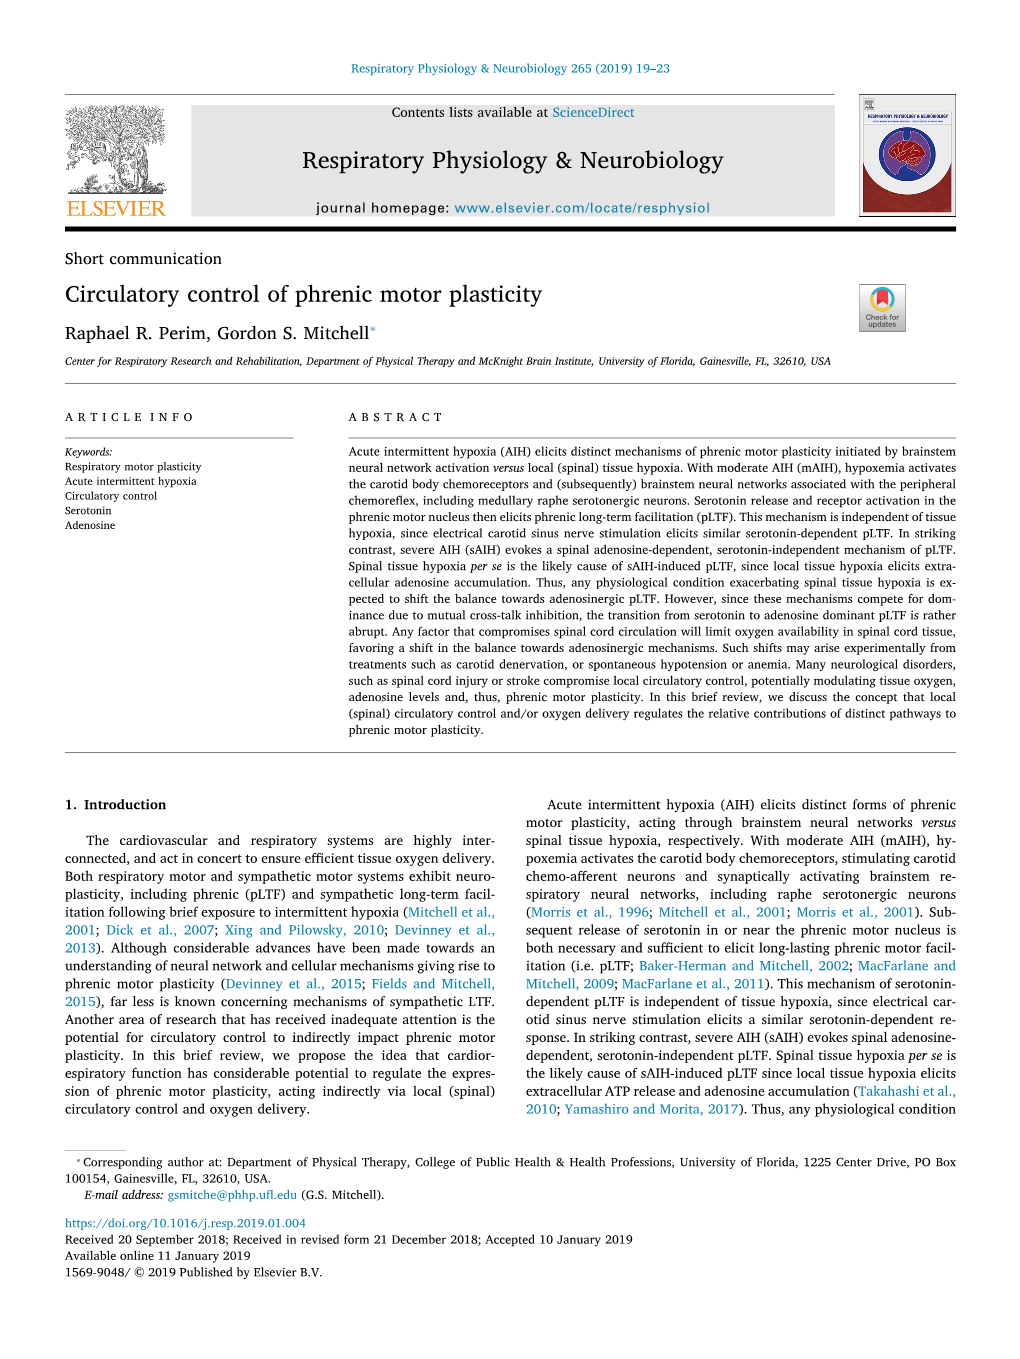 Circulatory Control of Phrenic Motor Plasticity T ⁎ Raphael R